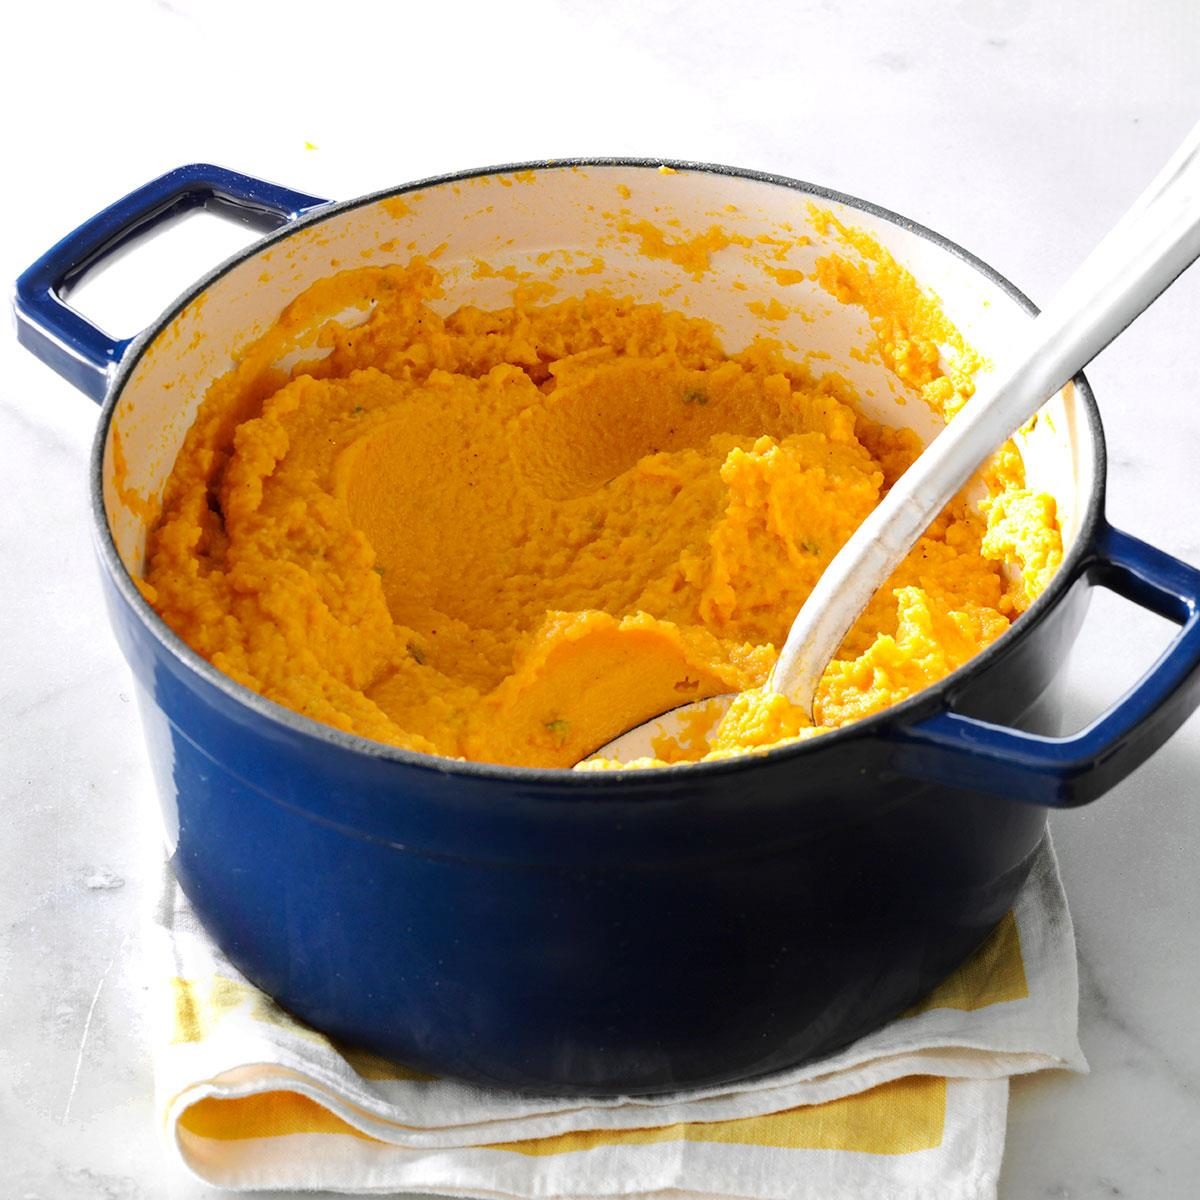 Fresh Pumpkin Recipes You've Never Tried Before | Reader's Digest